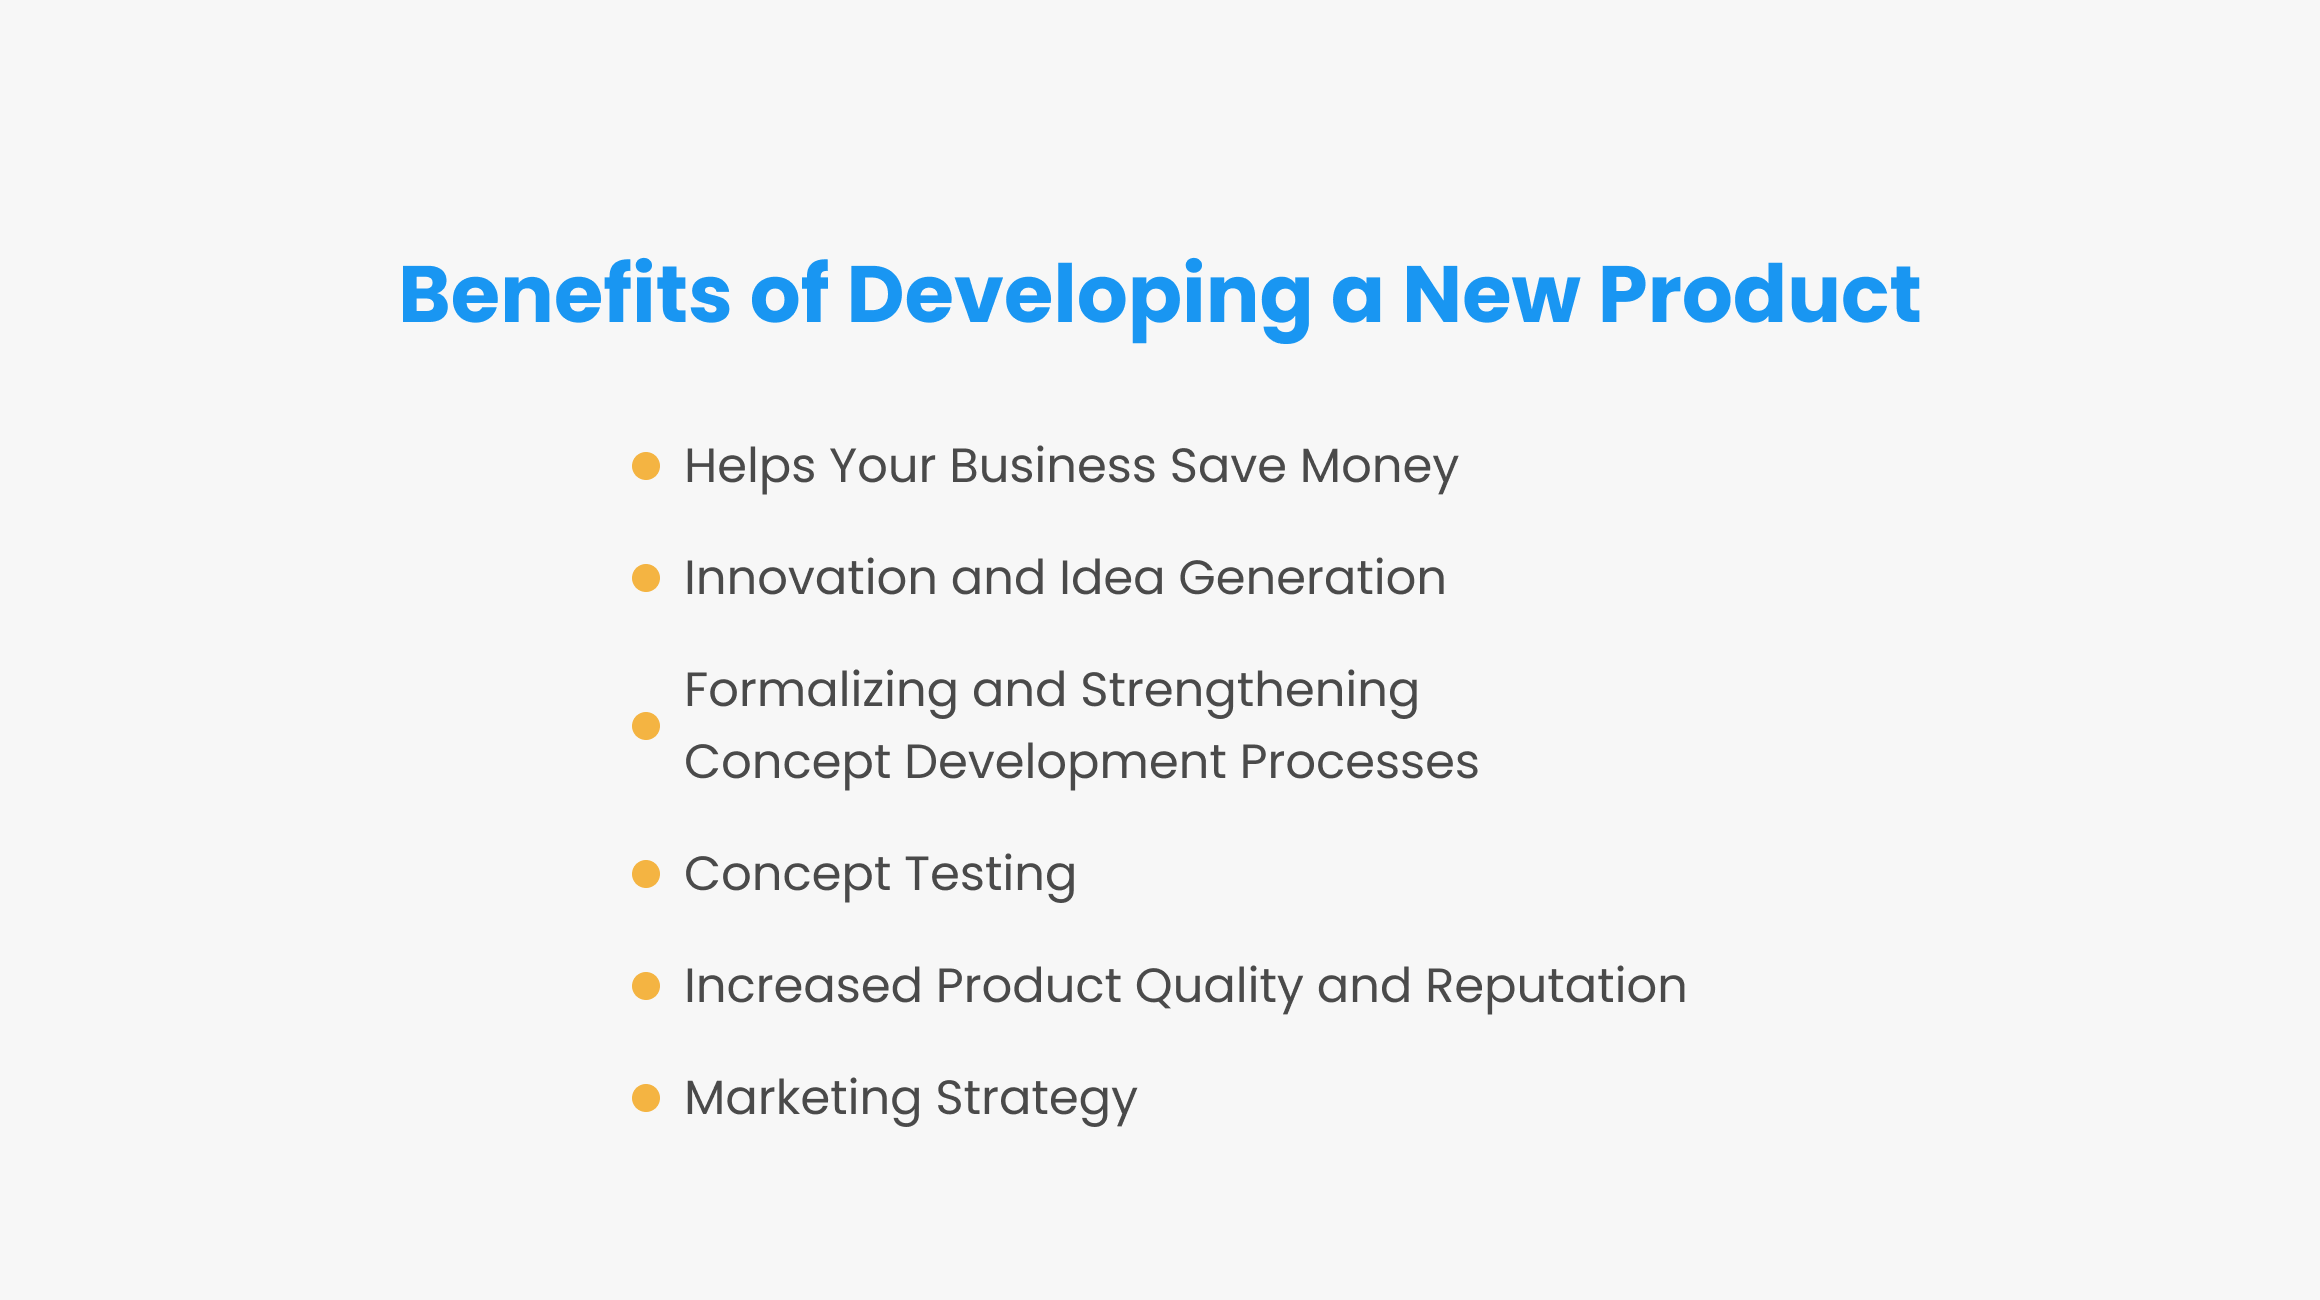 New Product Development Benefits